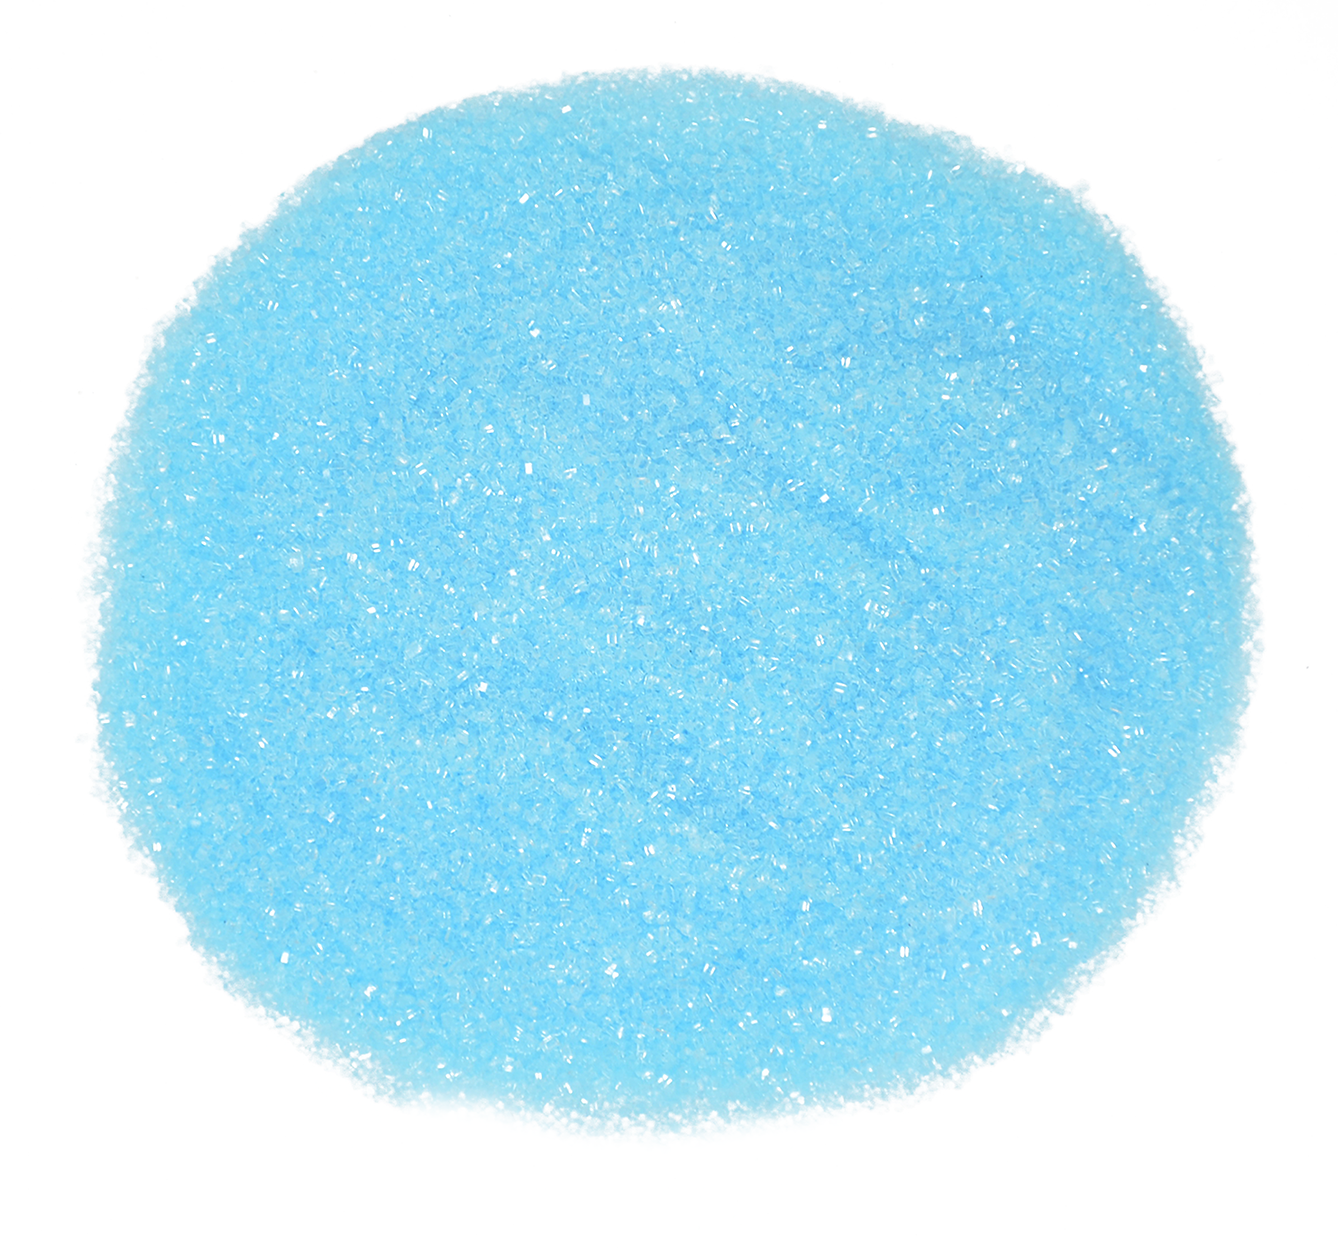 Larimar - Sky Blue Sanding Sugar 4oz